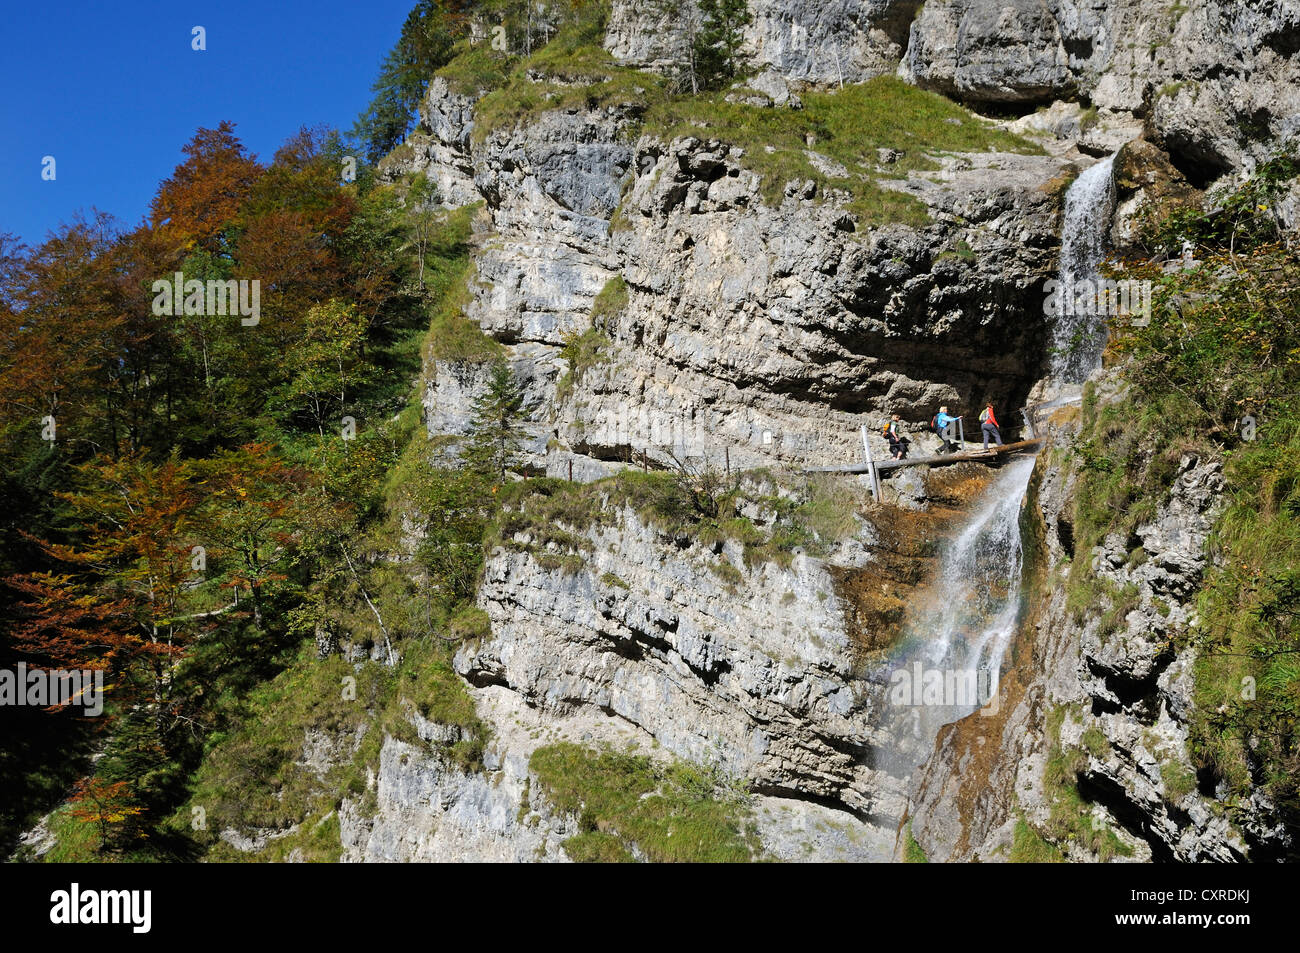 Female hikers at the Staubfall waterfall, Heutal valley, Unken, Tyrol, Austria, Europe Stock Photo